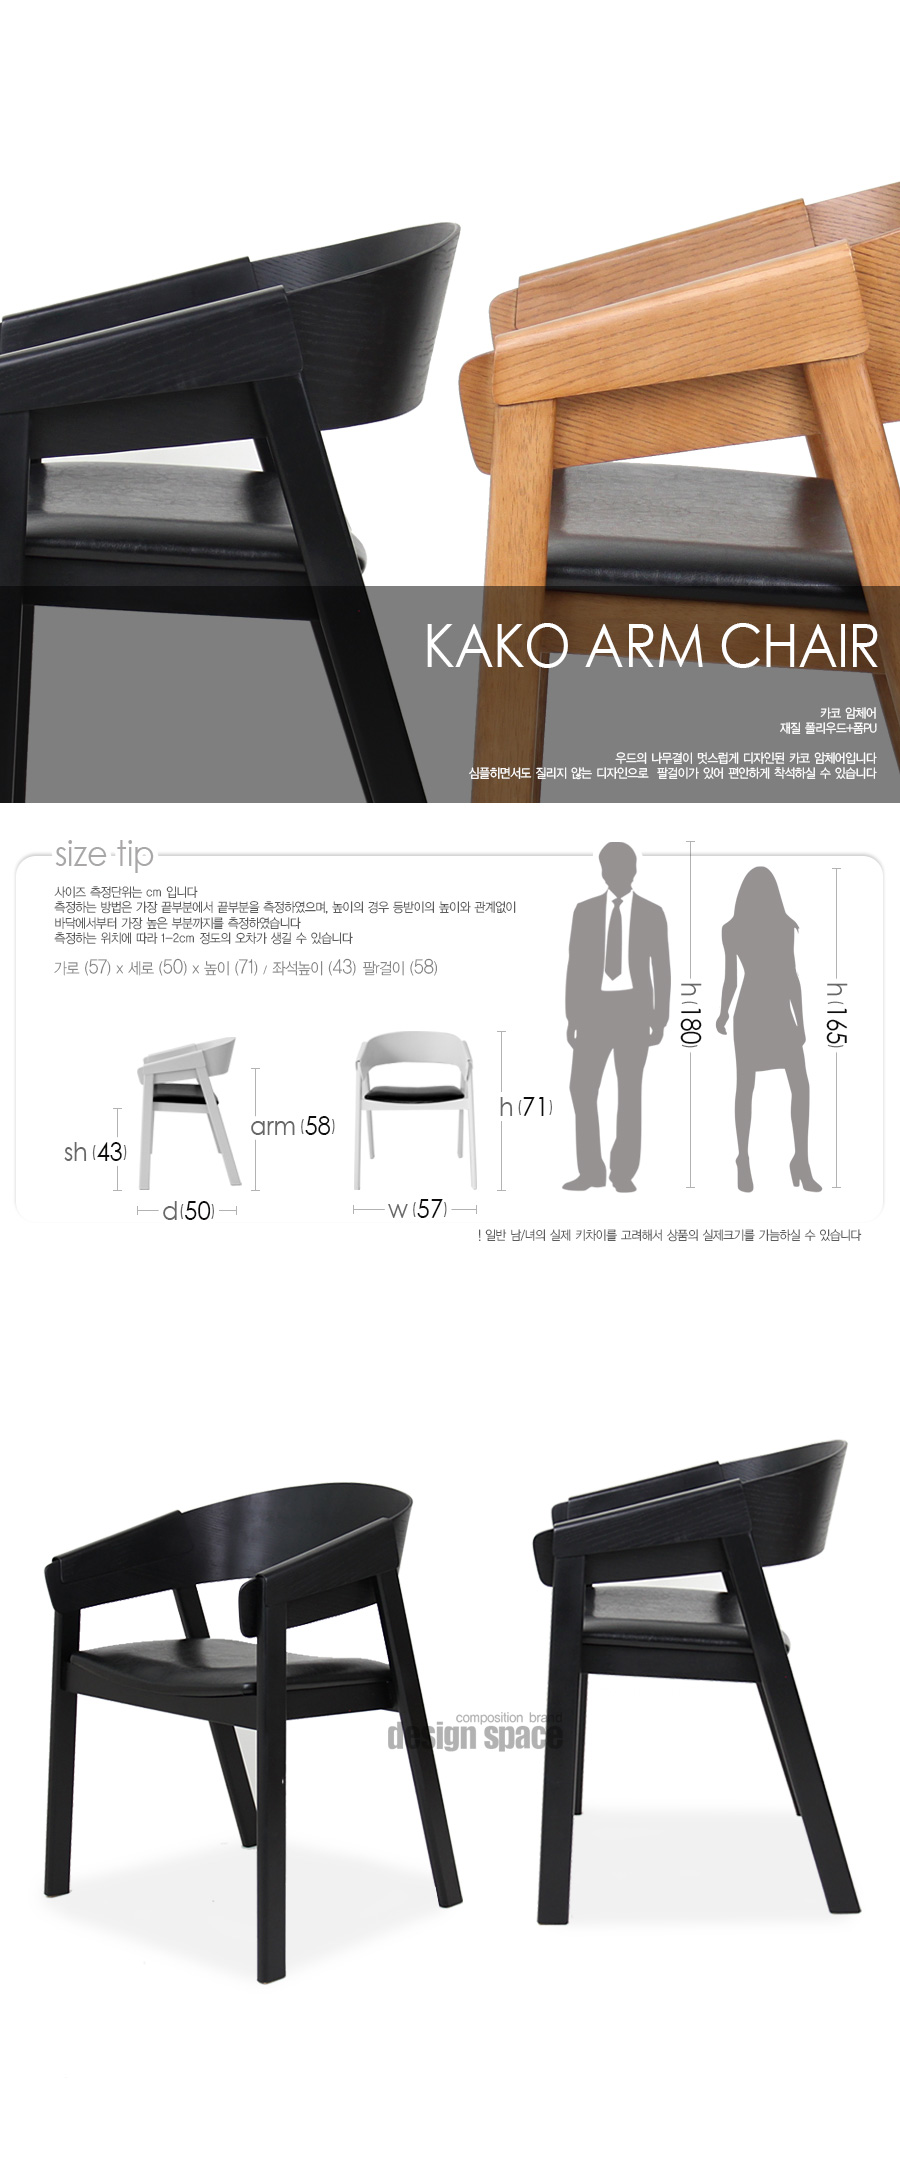 kako-arm-chair_01.jpg